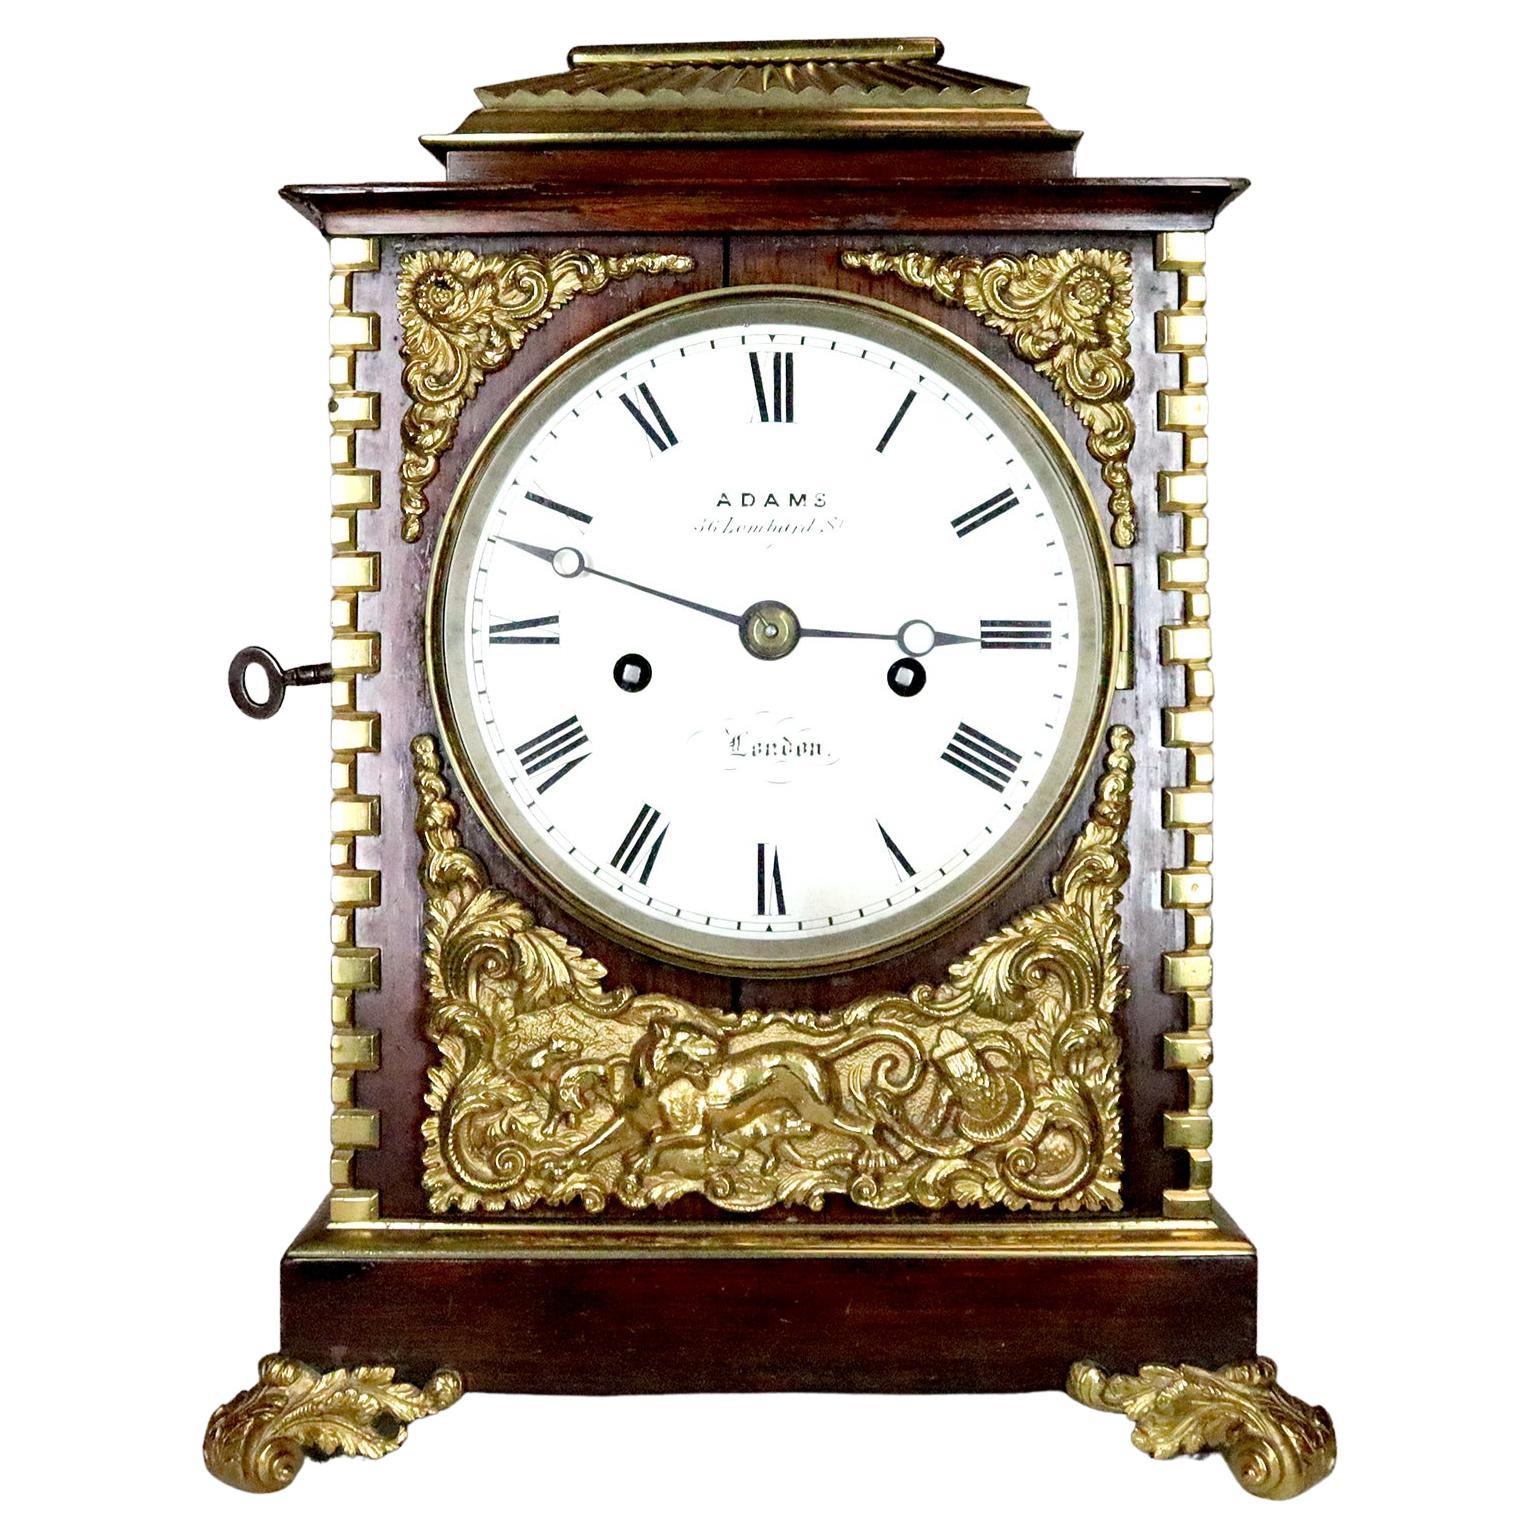 A Diminutive Bracket Clock by Adams of Lombard Street For Sale